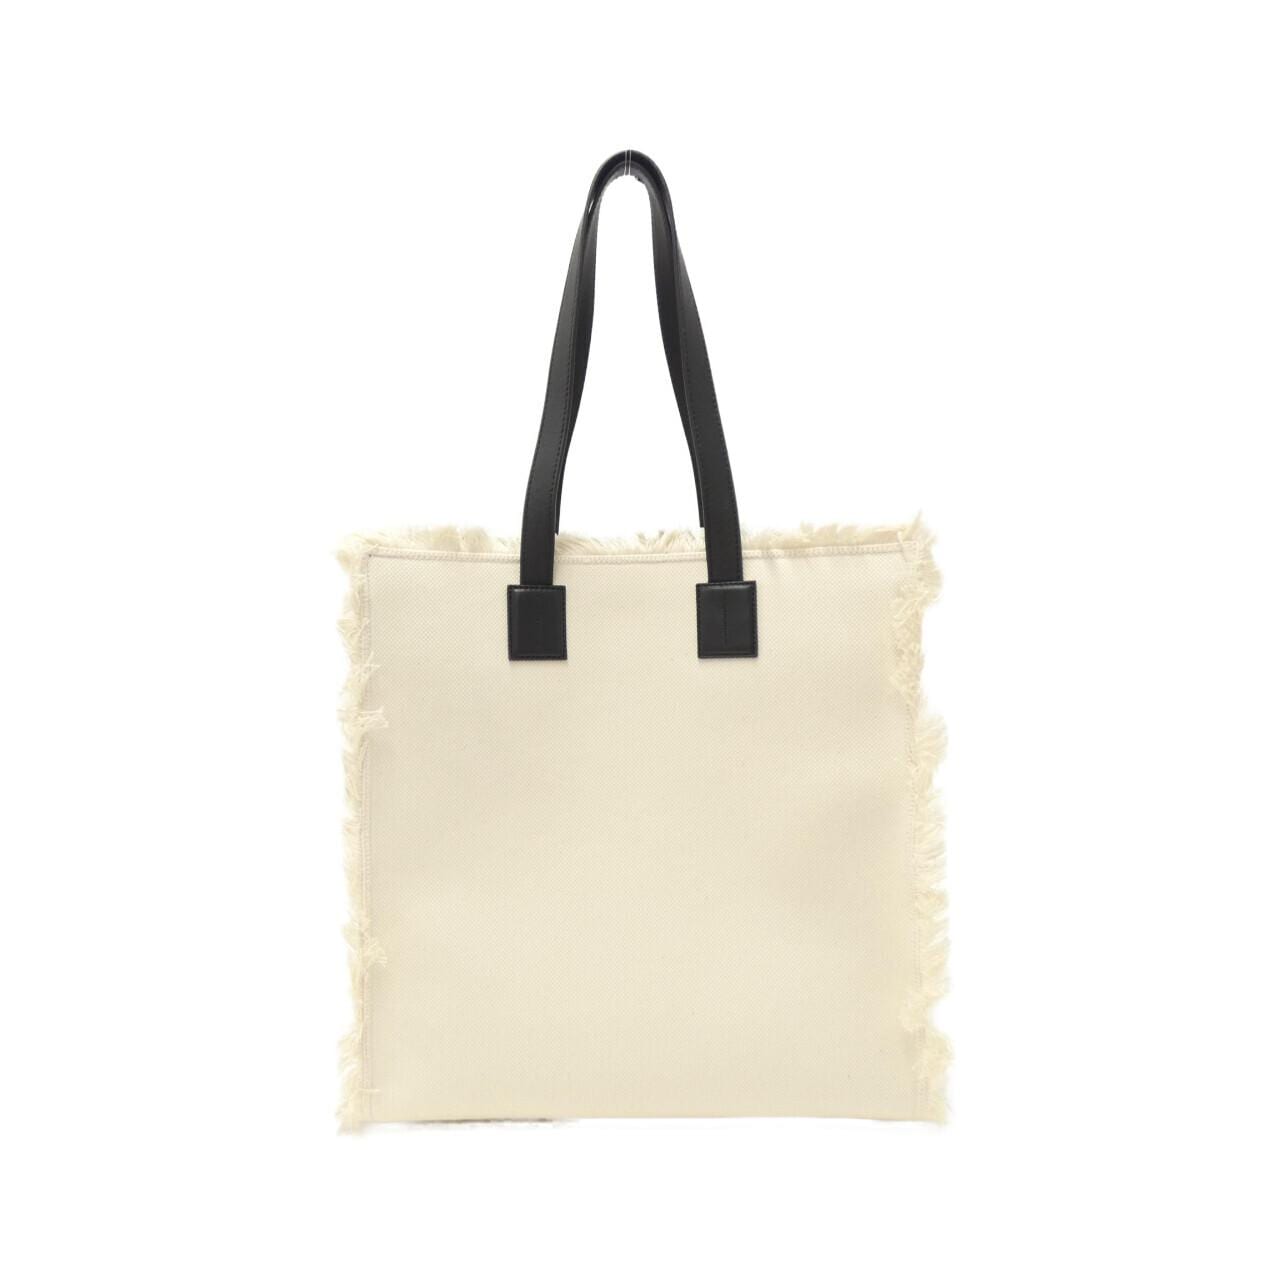 [BRAND NEW] Barry CRYSTALIA bag